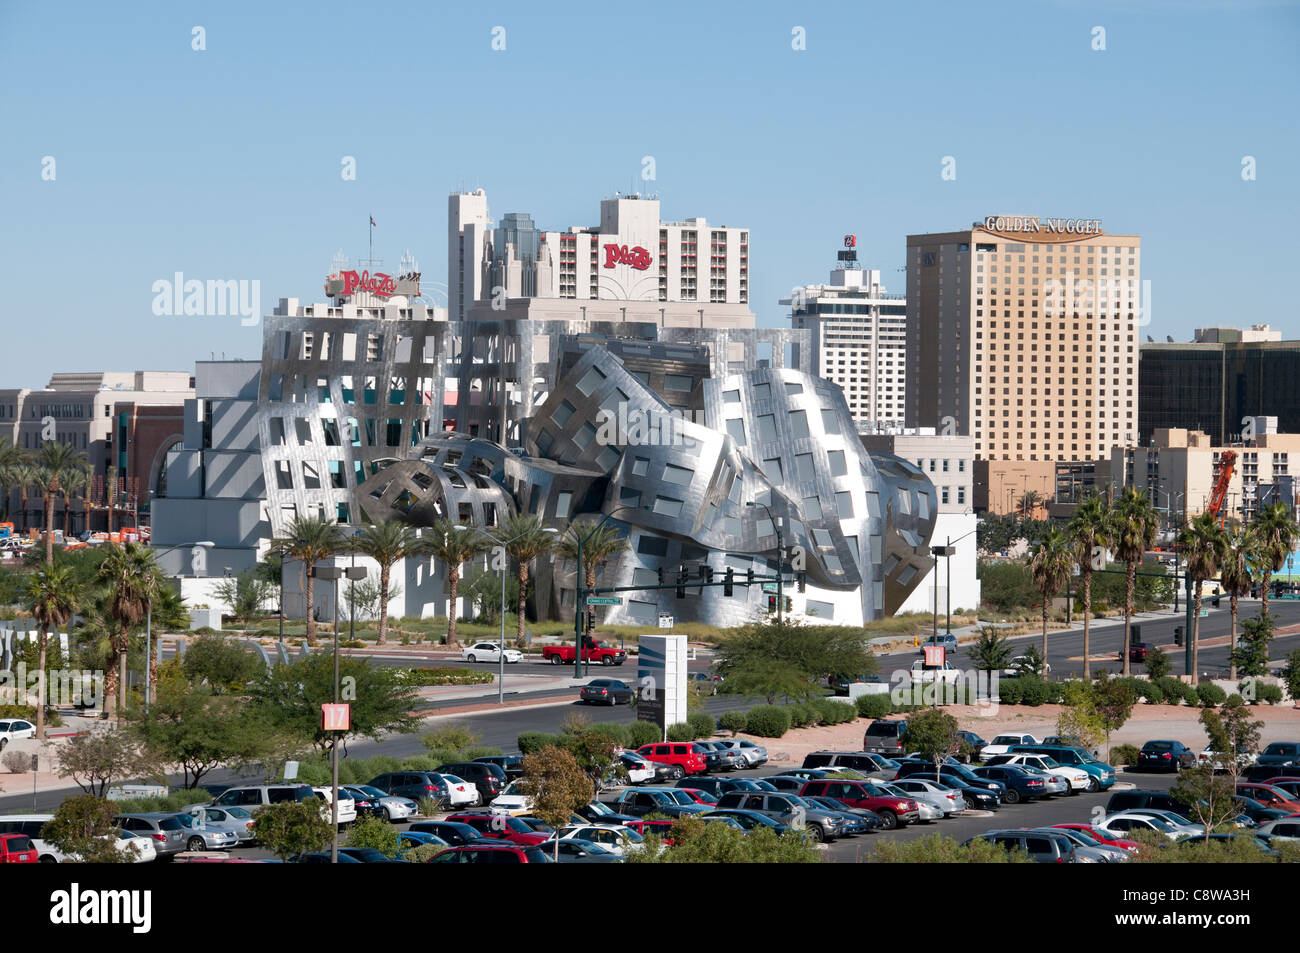 Cleveland Clinic Lou Ruvo Center for Brain Health Las Vegas architetto Frank Gehry Stati Uniti Las Vegas architetto Frank Gehry Stati Uniti Foto Stock